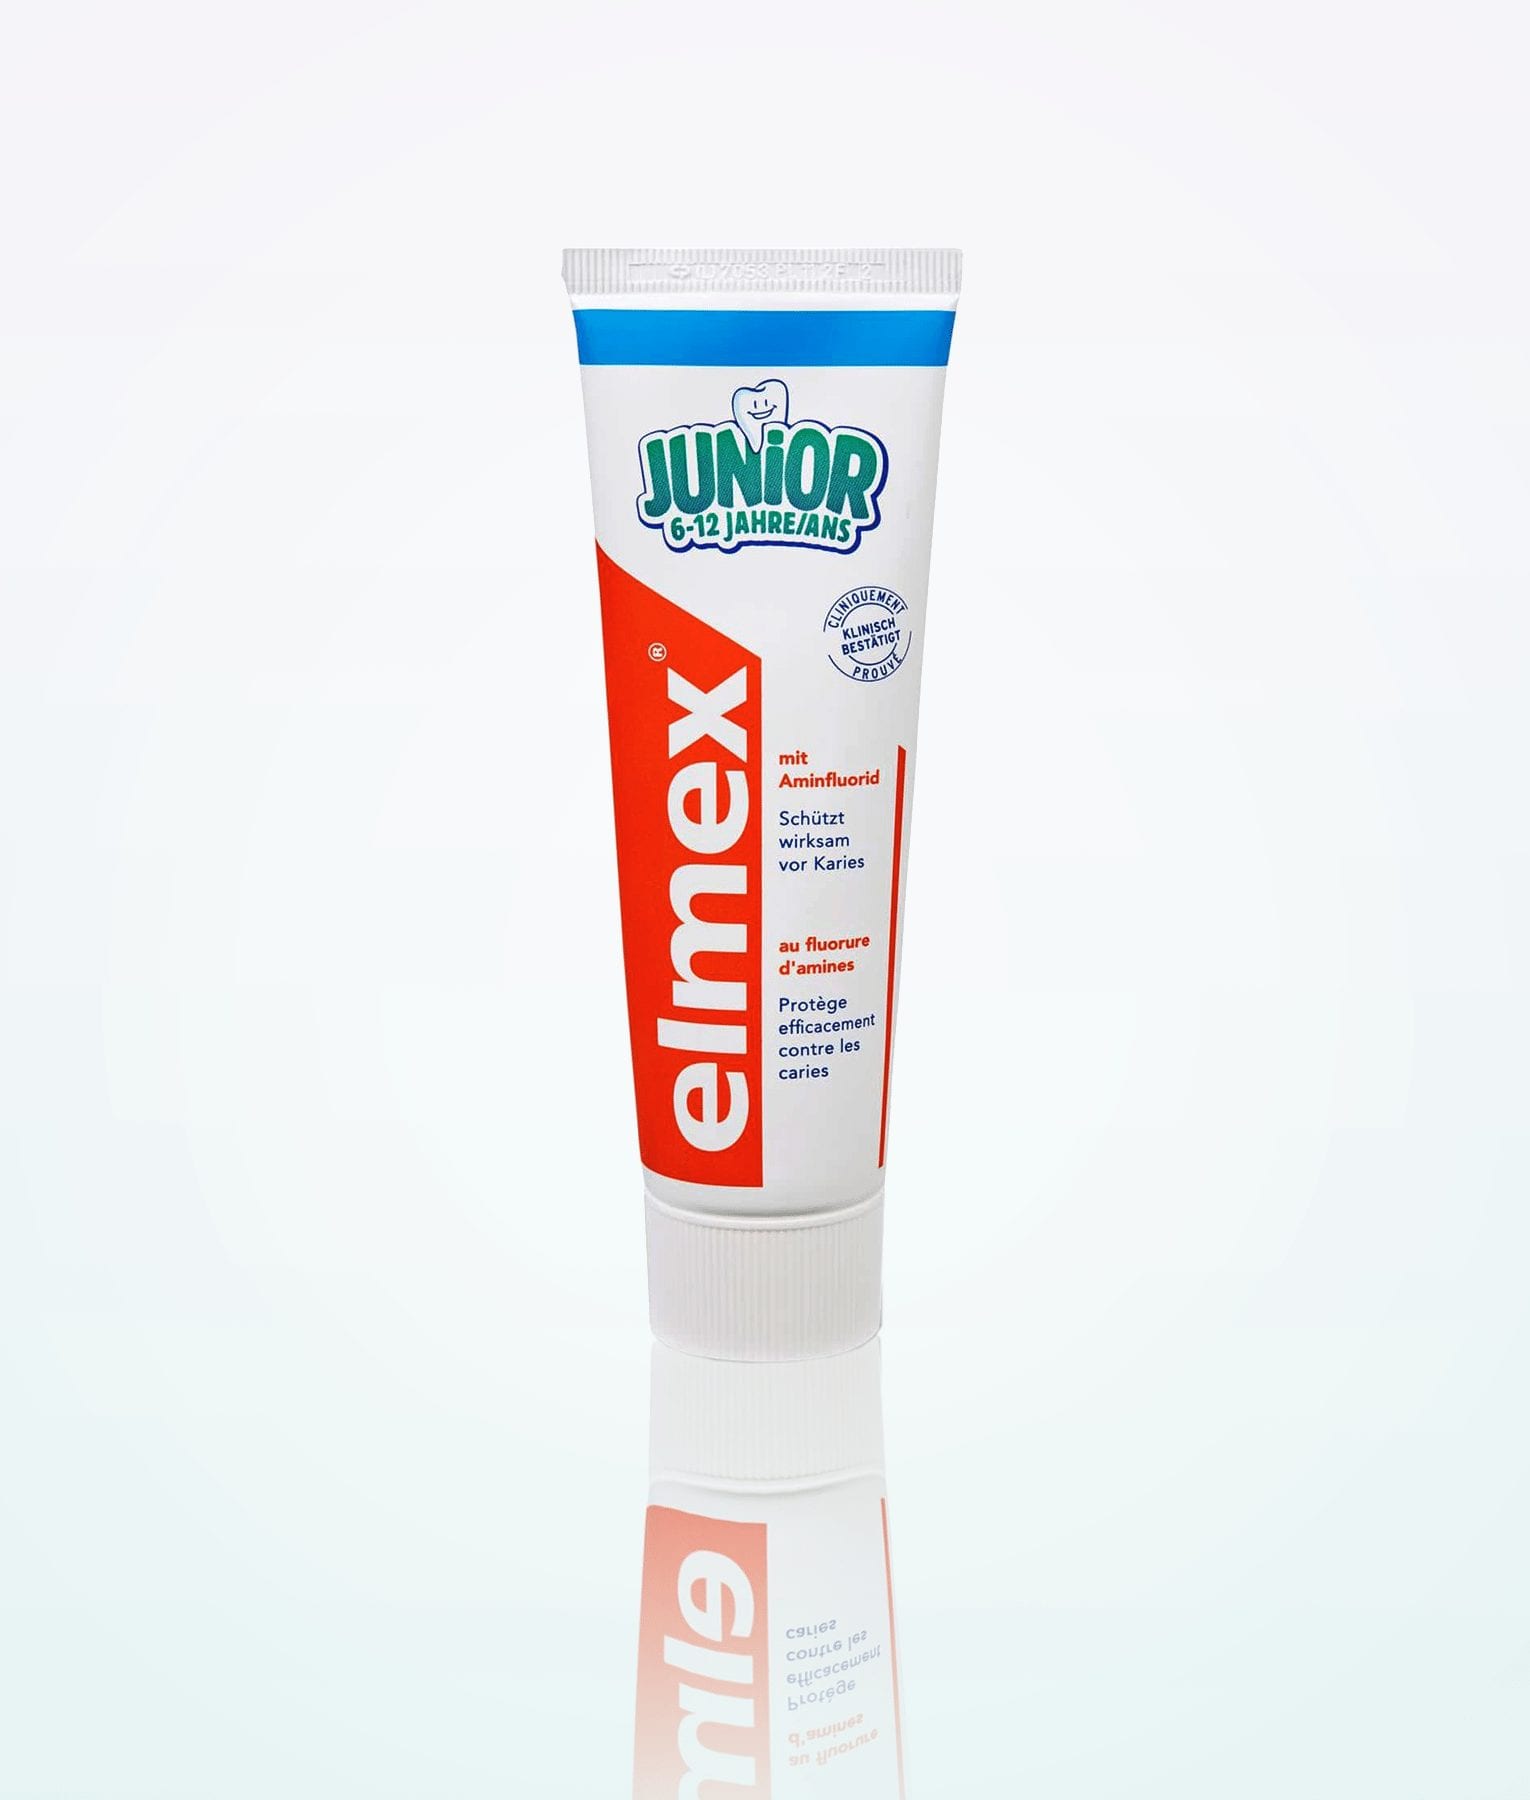 Elmex Junior Toothpaste 6 12 years 75g